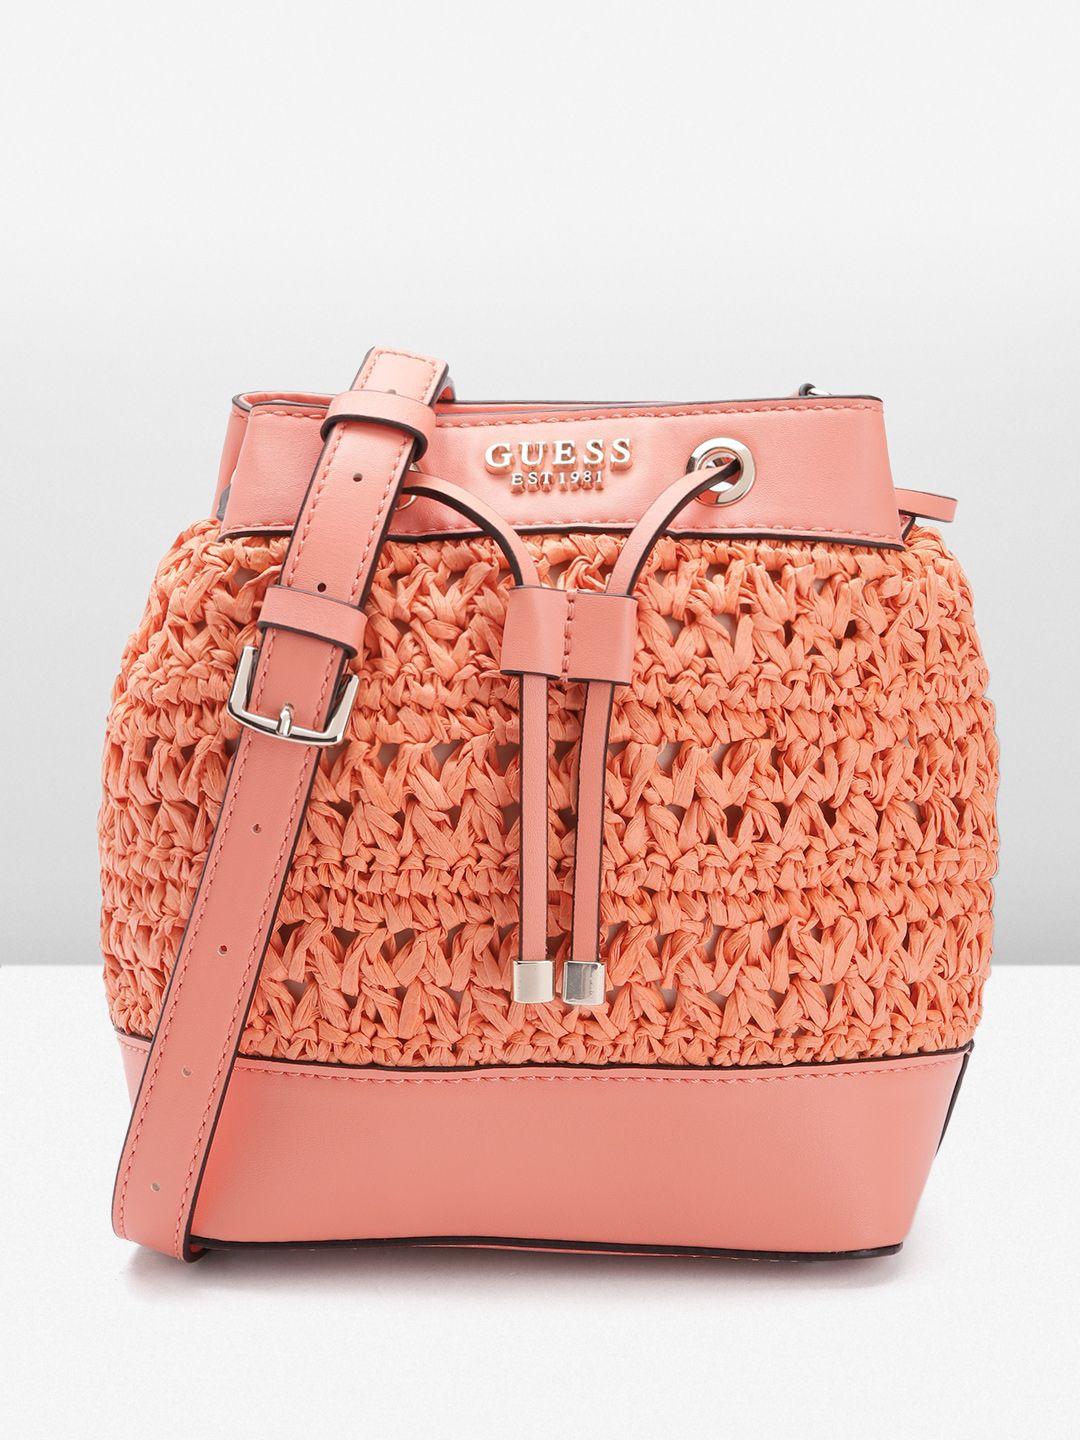 guess basket weave textured structured sling bag